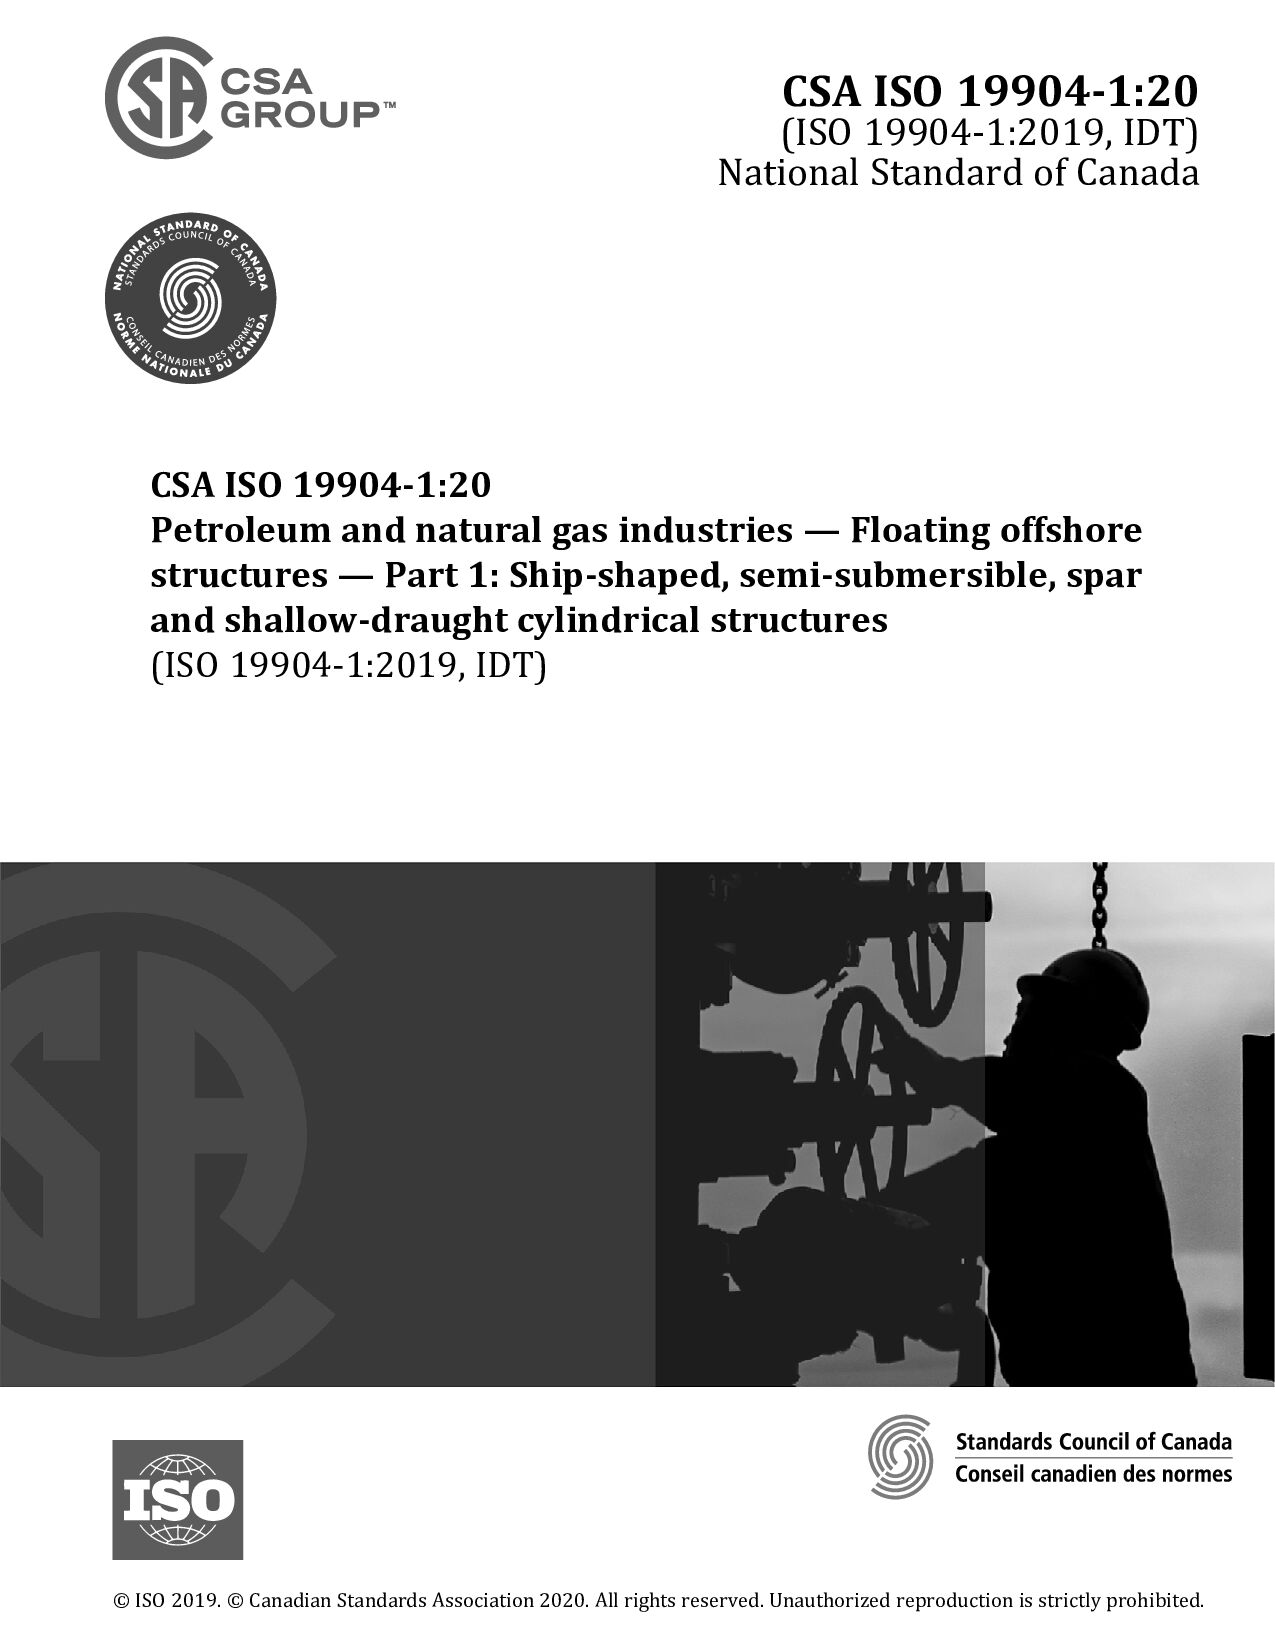 CSA ISO 19904-1:2020